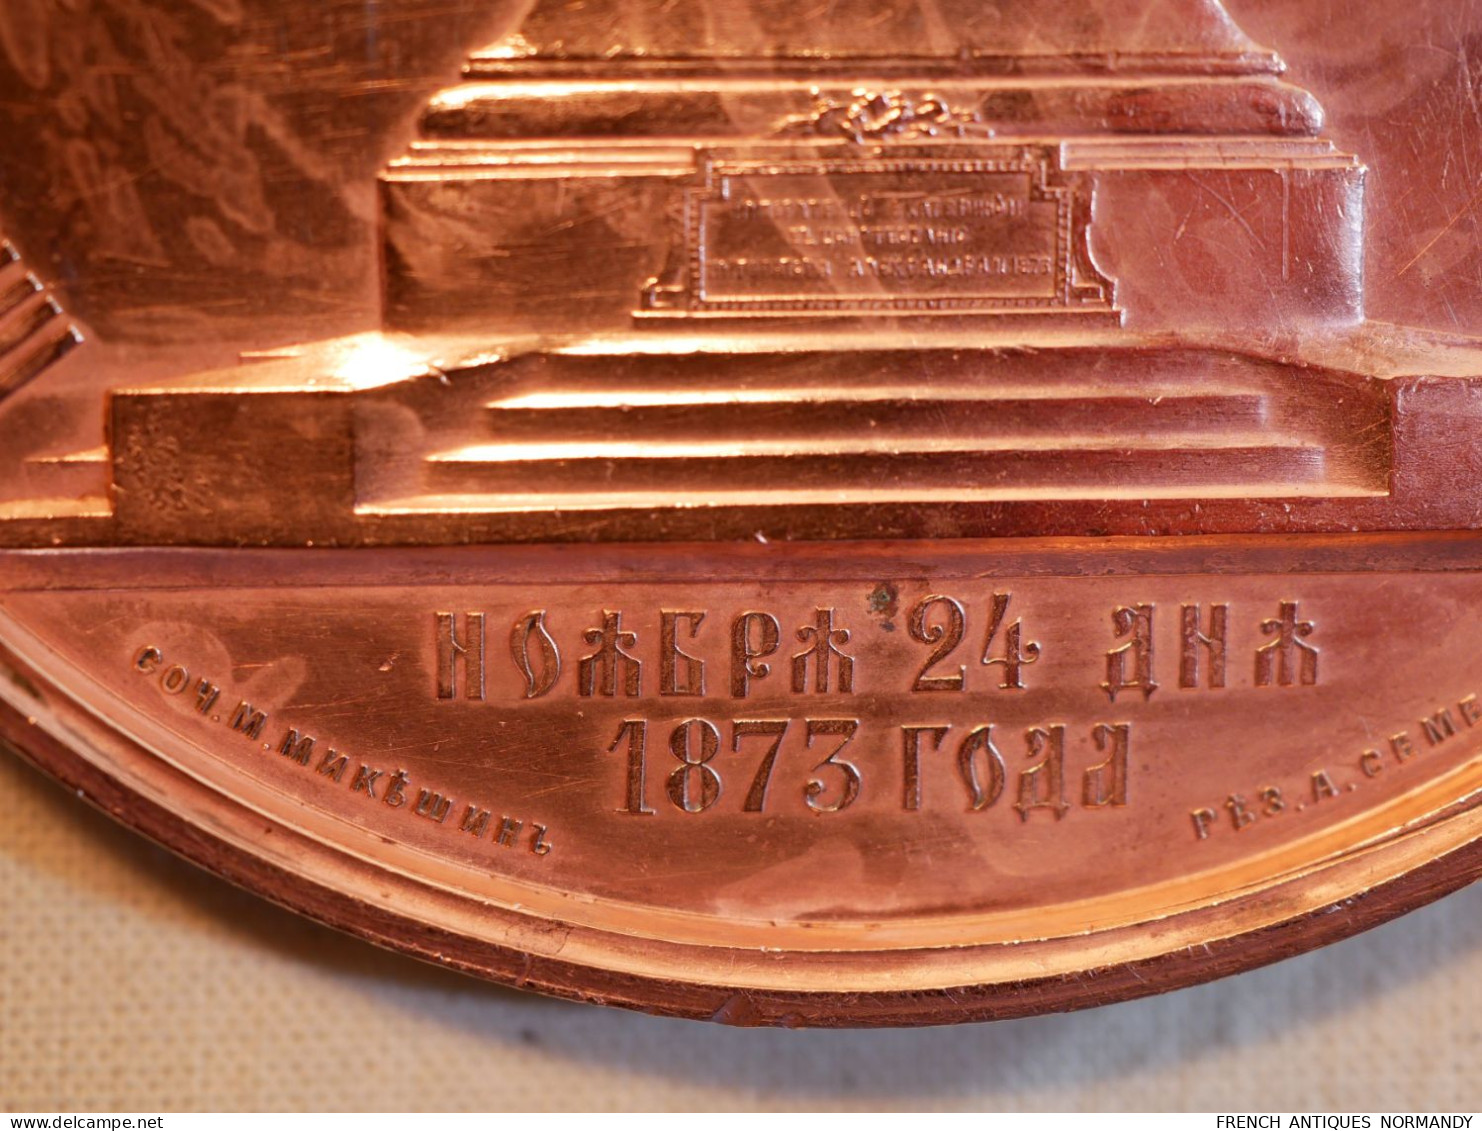 Russie Impériale - médaille 1873 inauguration monument de Catherine II M. Mikeshin A. Semenov ref BX24RUS01